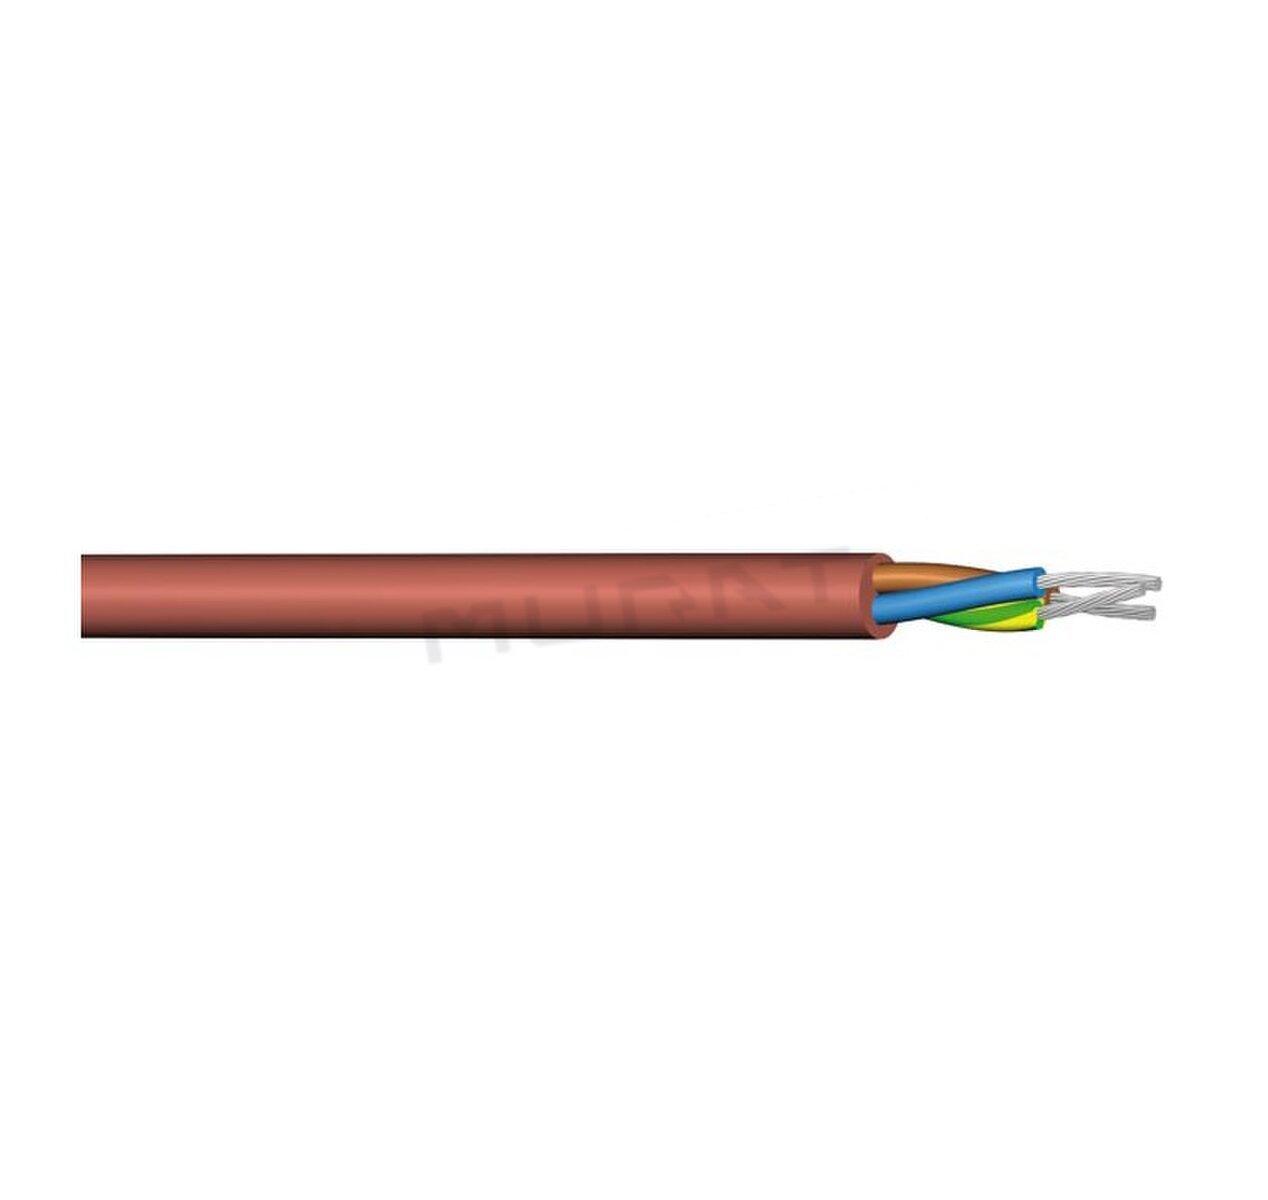 Kábel SIHF-J 4x16 mm2